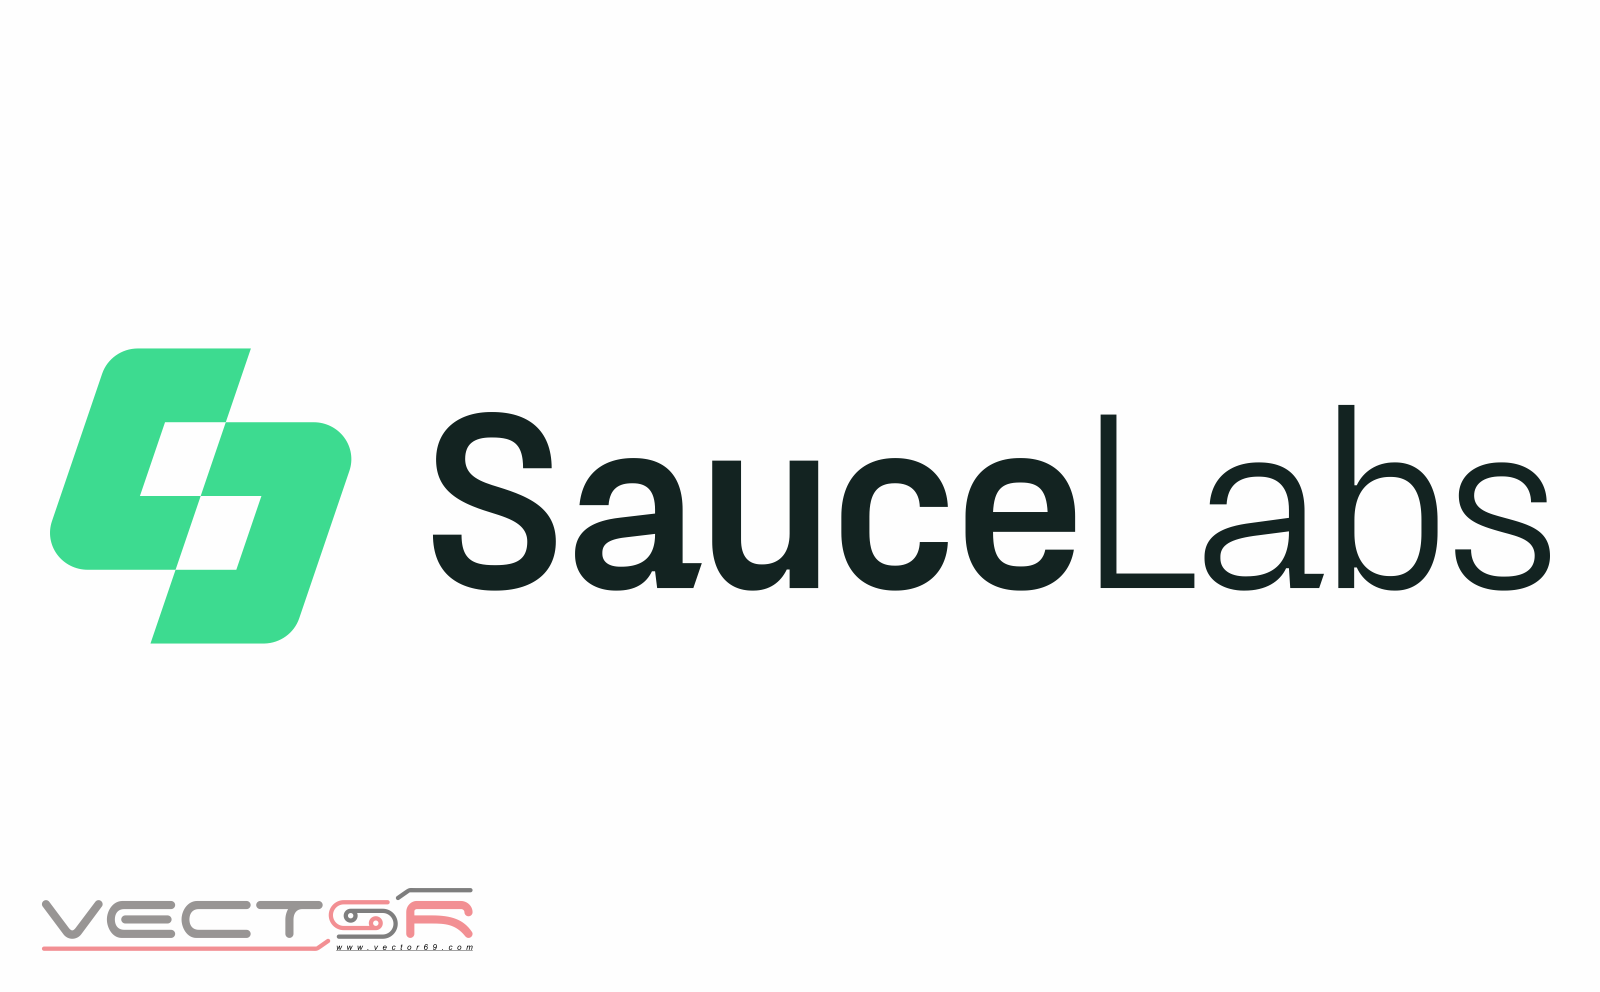 Sauce Labs Logo - Download Transparent Images, Portable Network Graphics (.PNG)